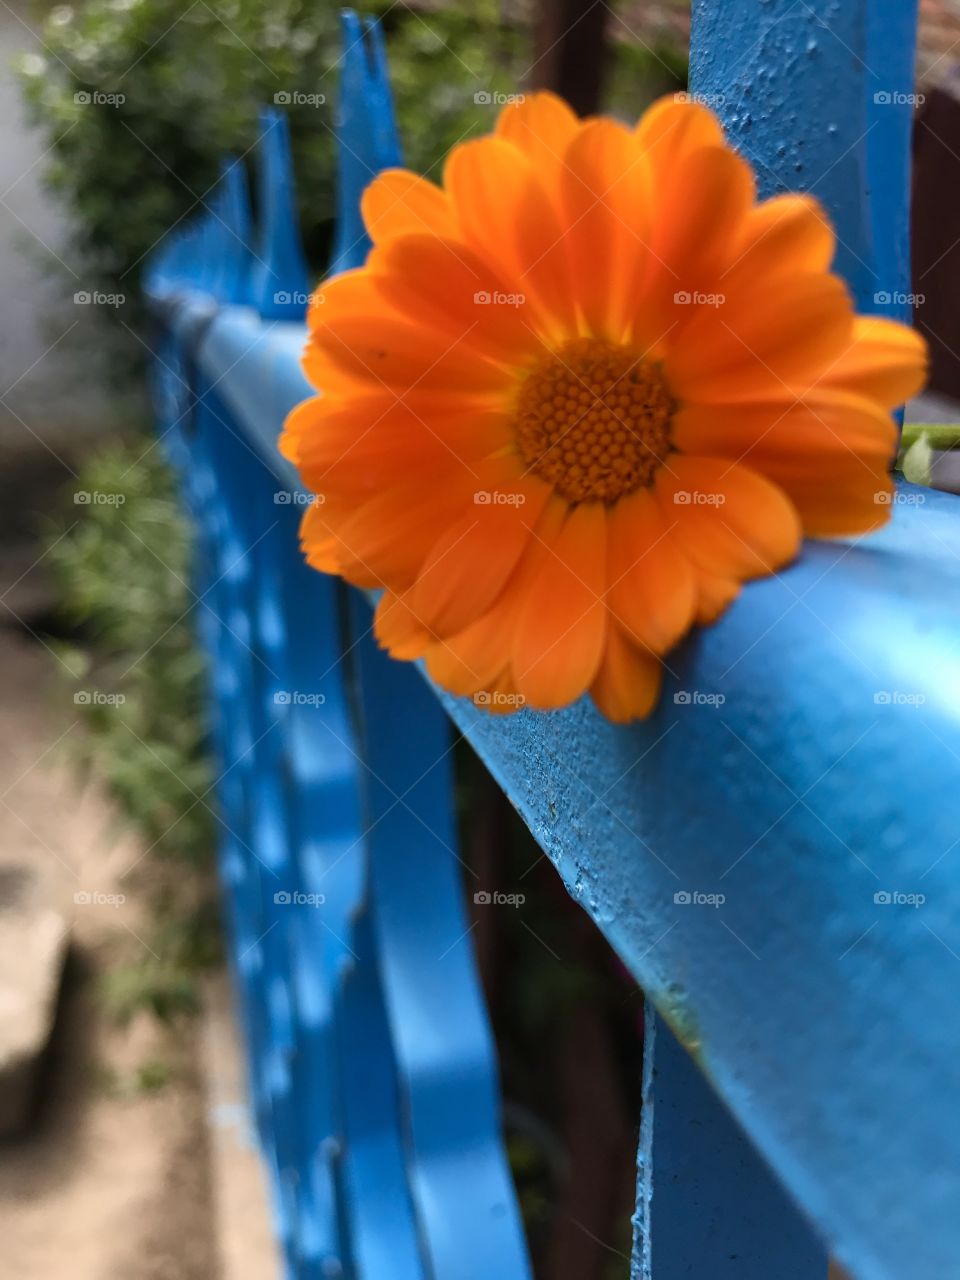 On Ona beautiful orange marigold flower on a lighter blue fence.